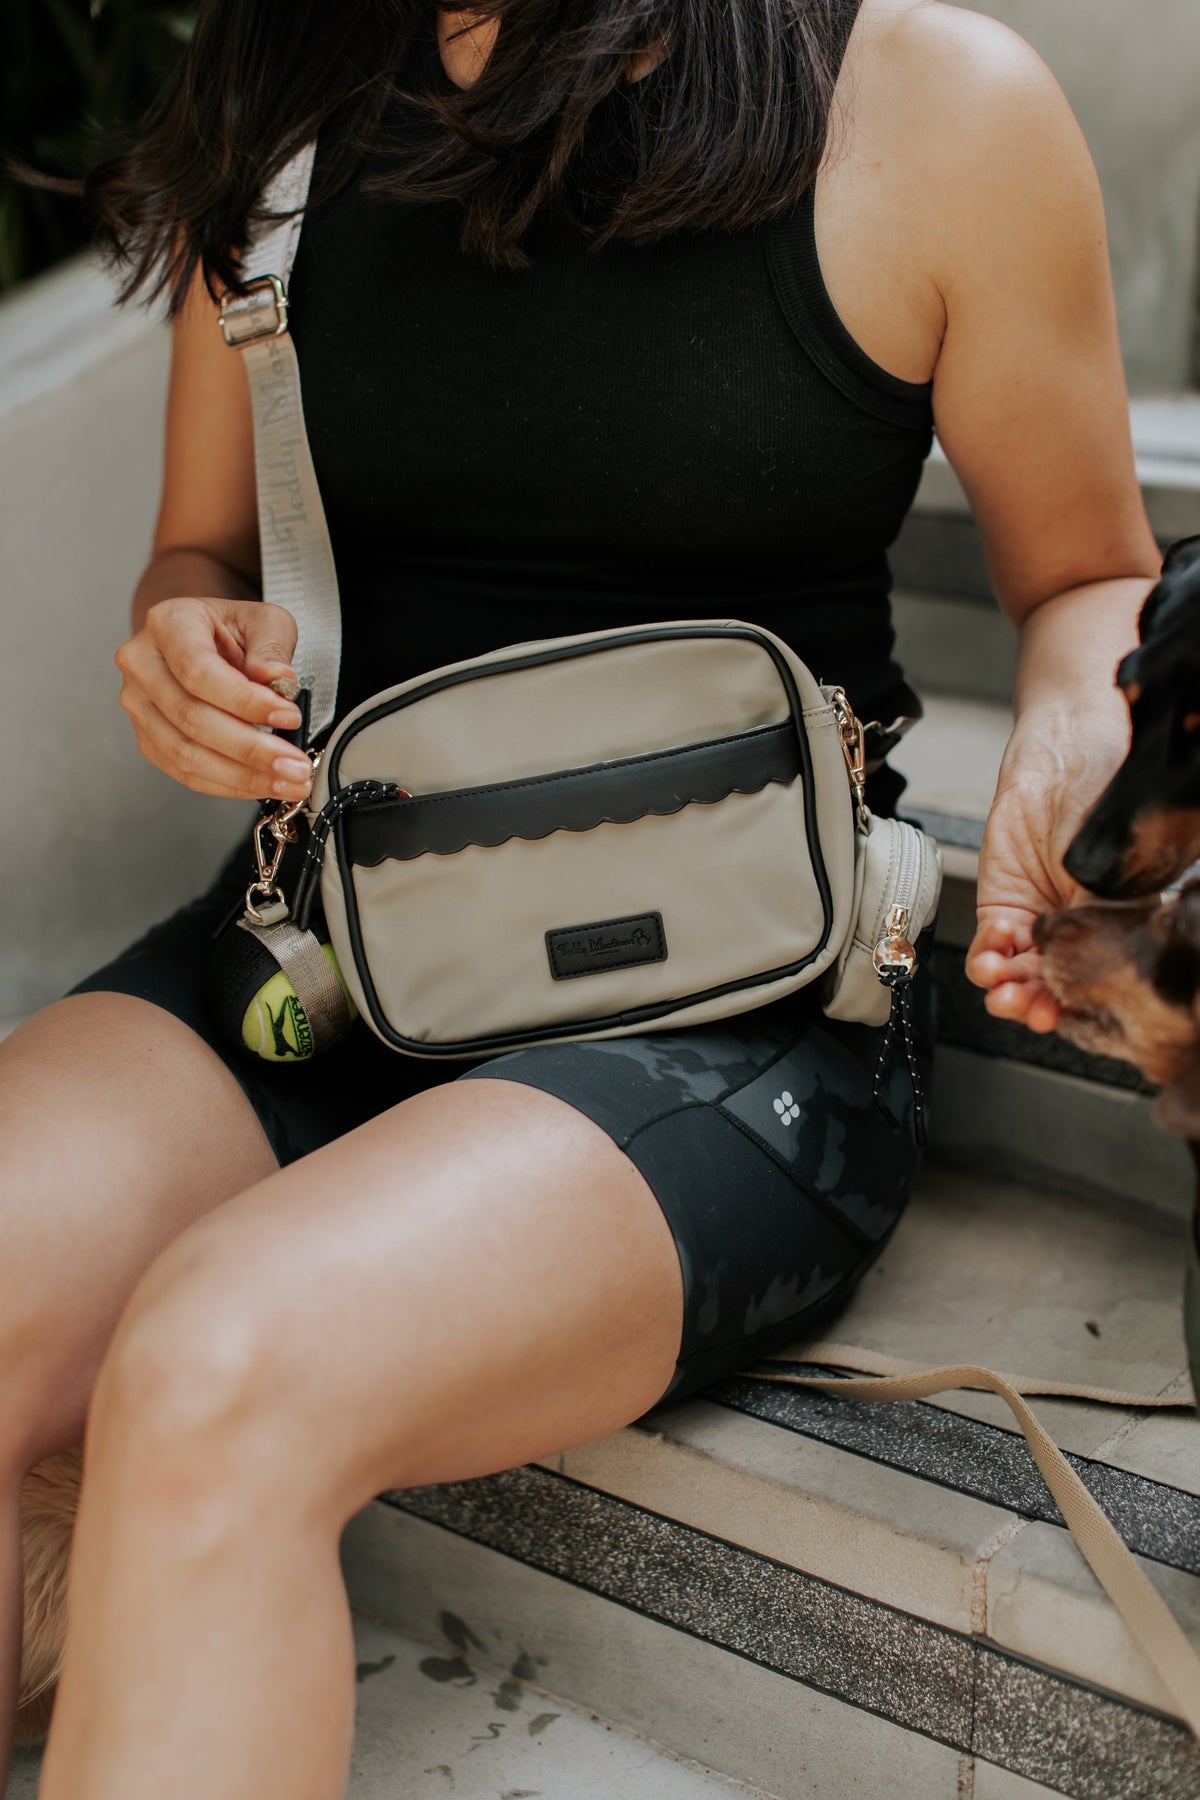 NEW! 'The Explorer' Luxury Dog Walking Bag